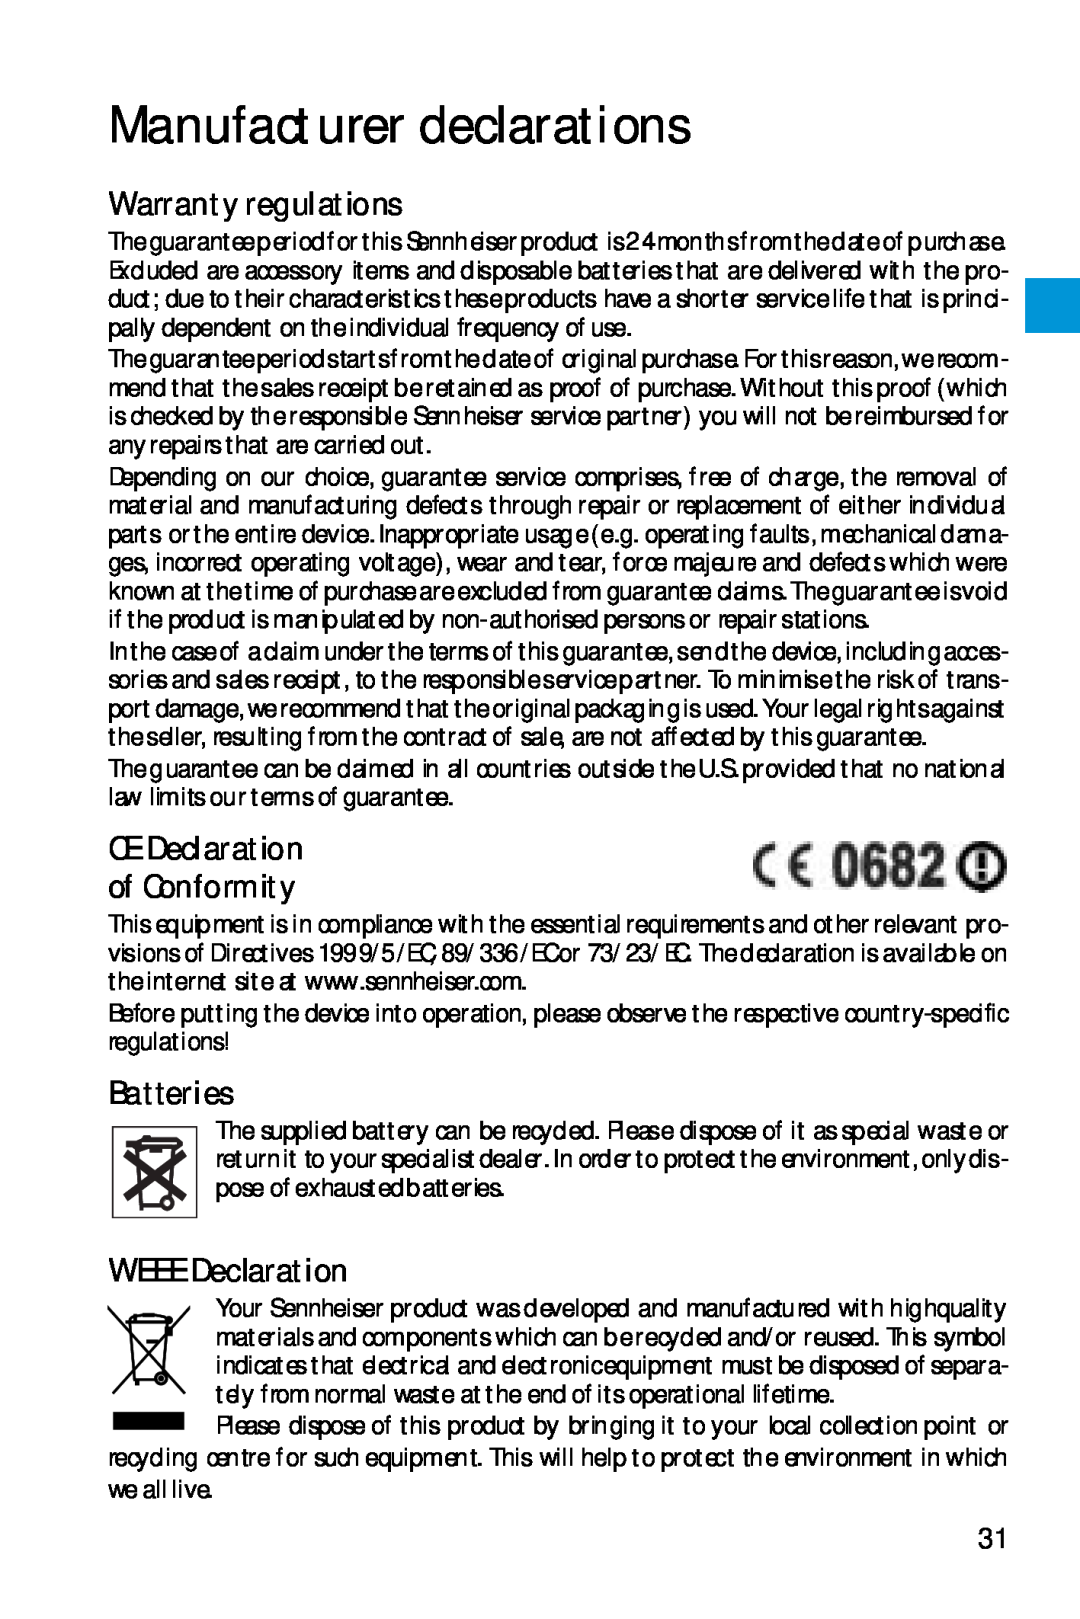 Sennheiser SK 5212 manual Manufacturer declarations, Warranty regulations, CE Declaration of Conformity, Batteries 